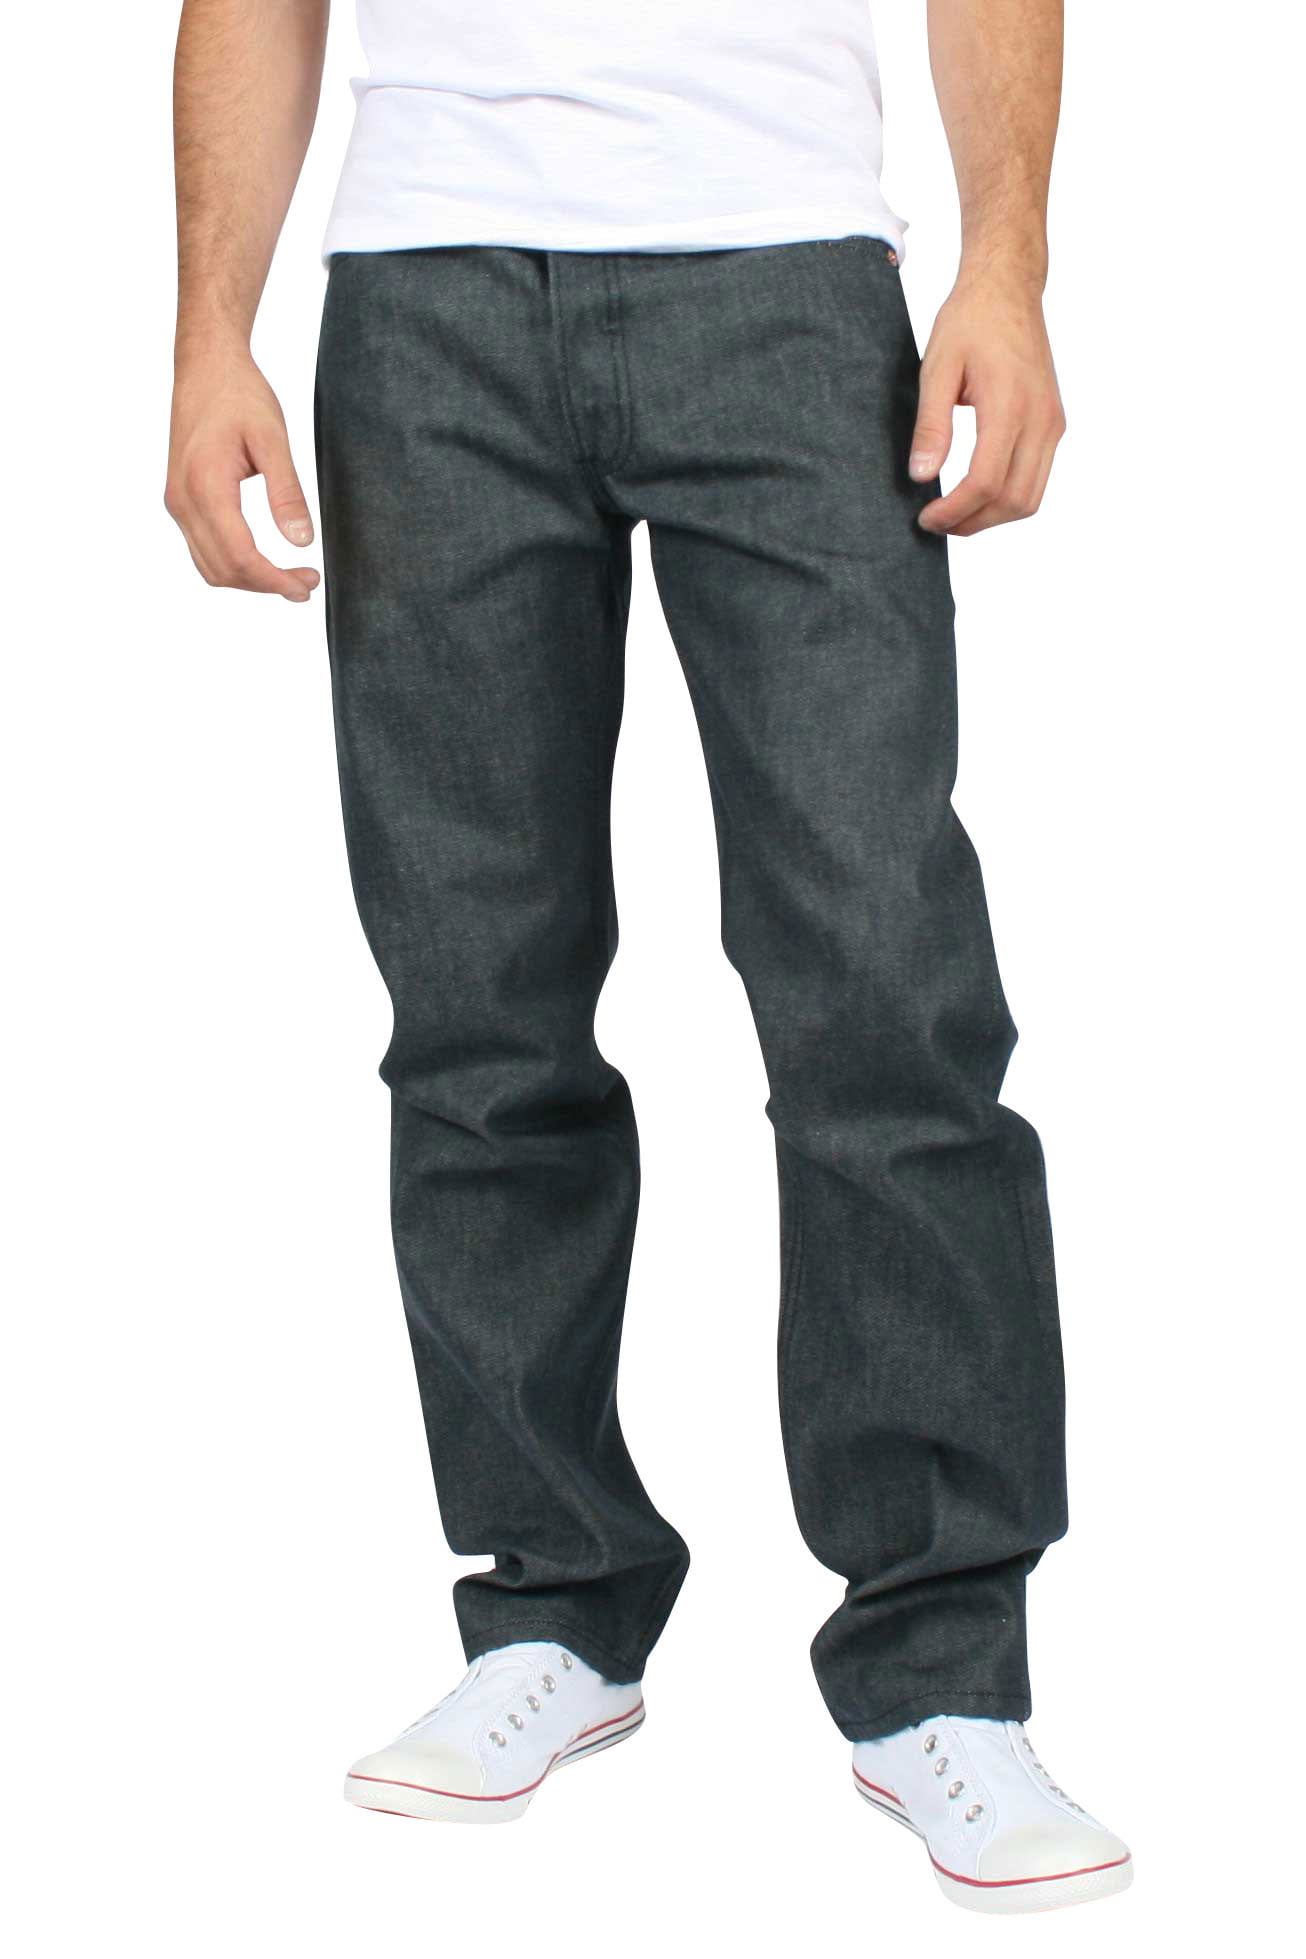 Levis - Mens 501 Button Fly Dark Grey Shrink to Fit Denim Jeans -  